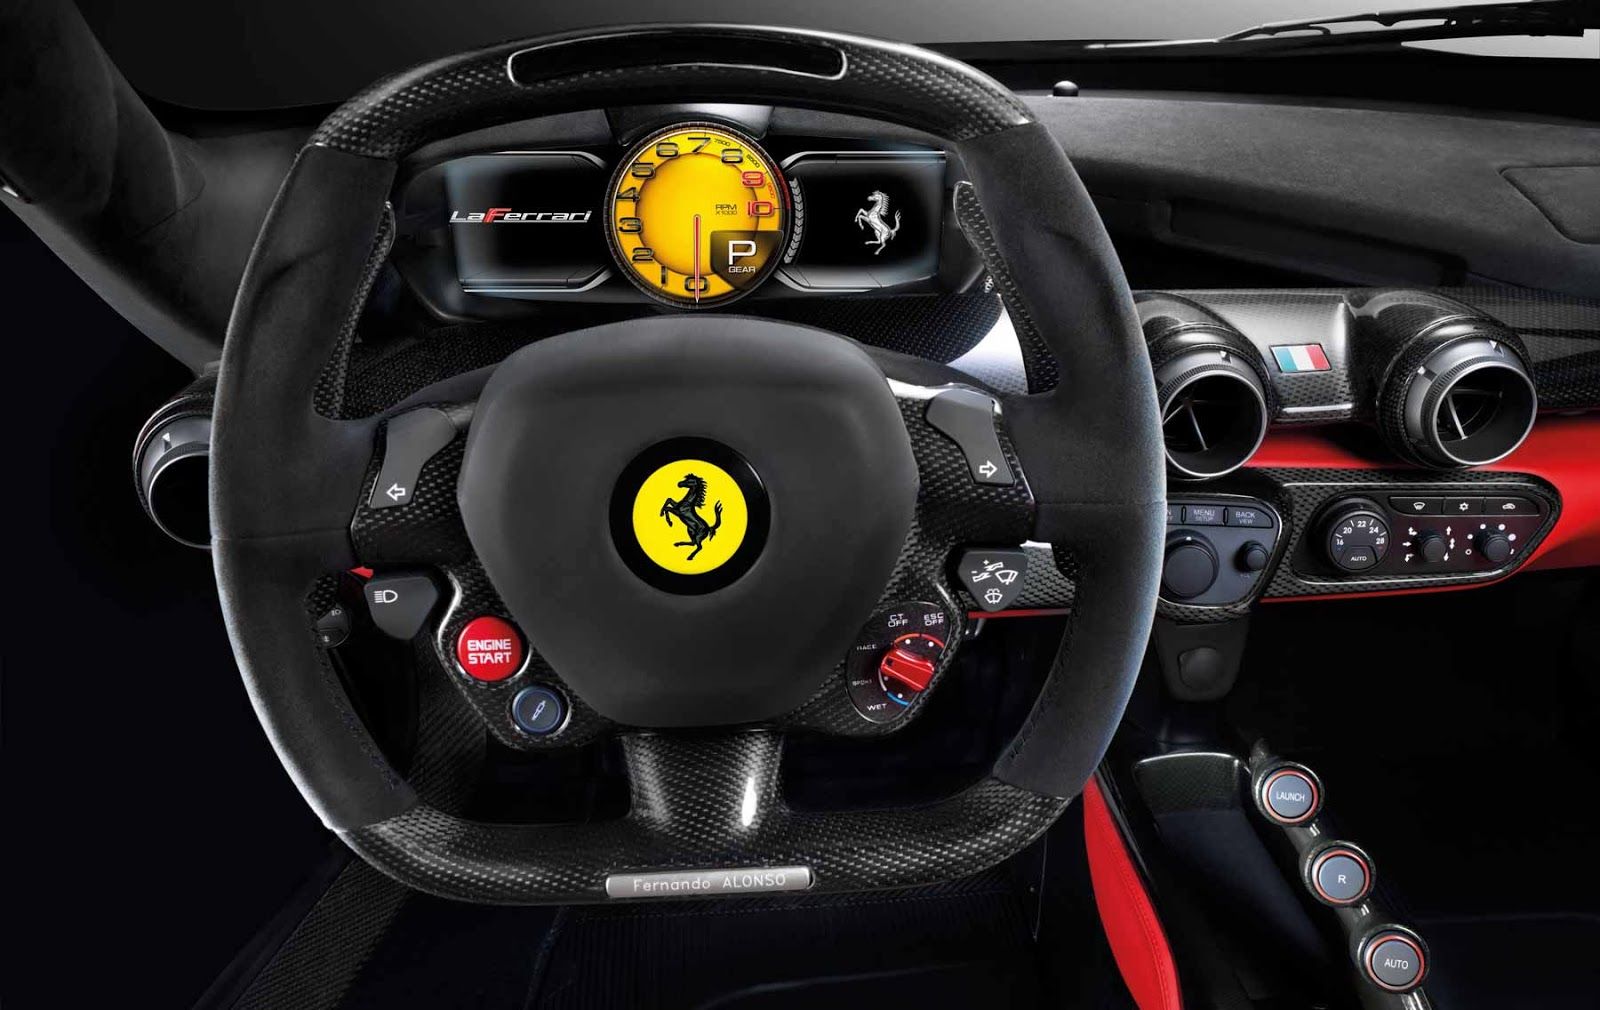 HD Wallpaper with cars car: Ferrari LaFerrari interior